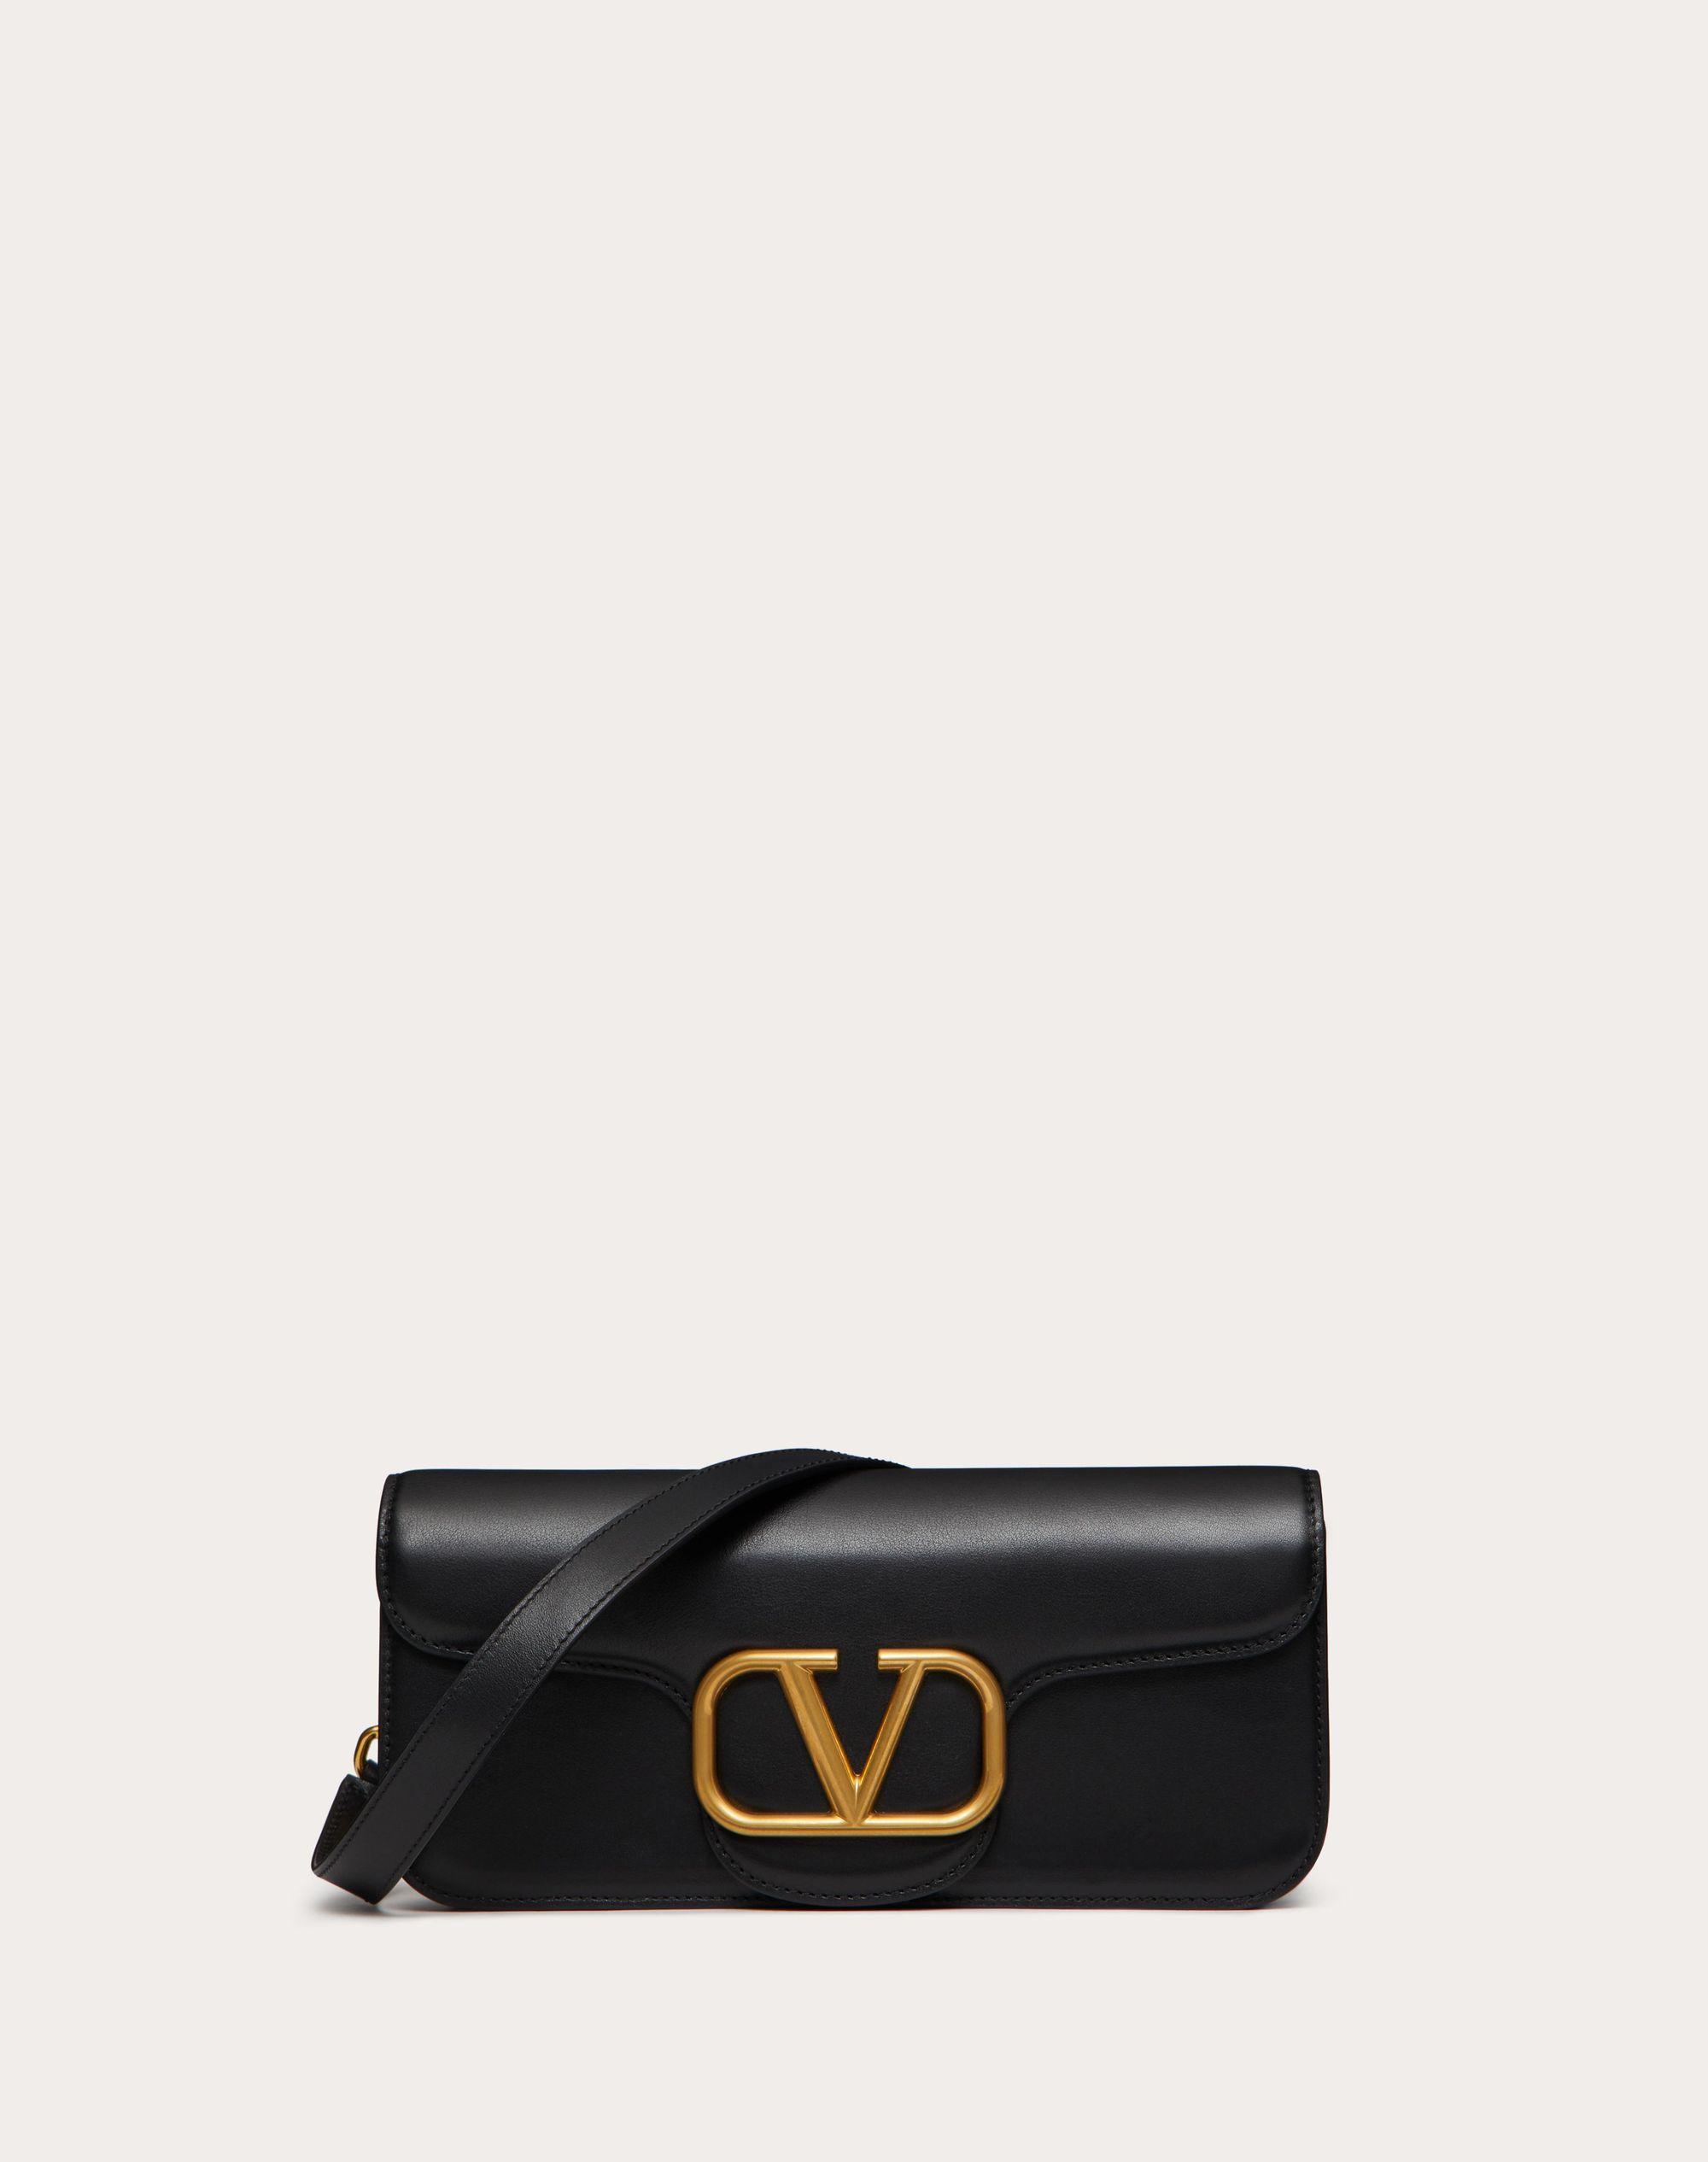 Valentino Garavani Men's Leather VLTN Crossbody Bag